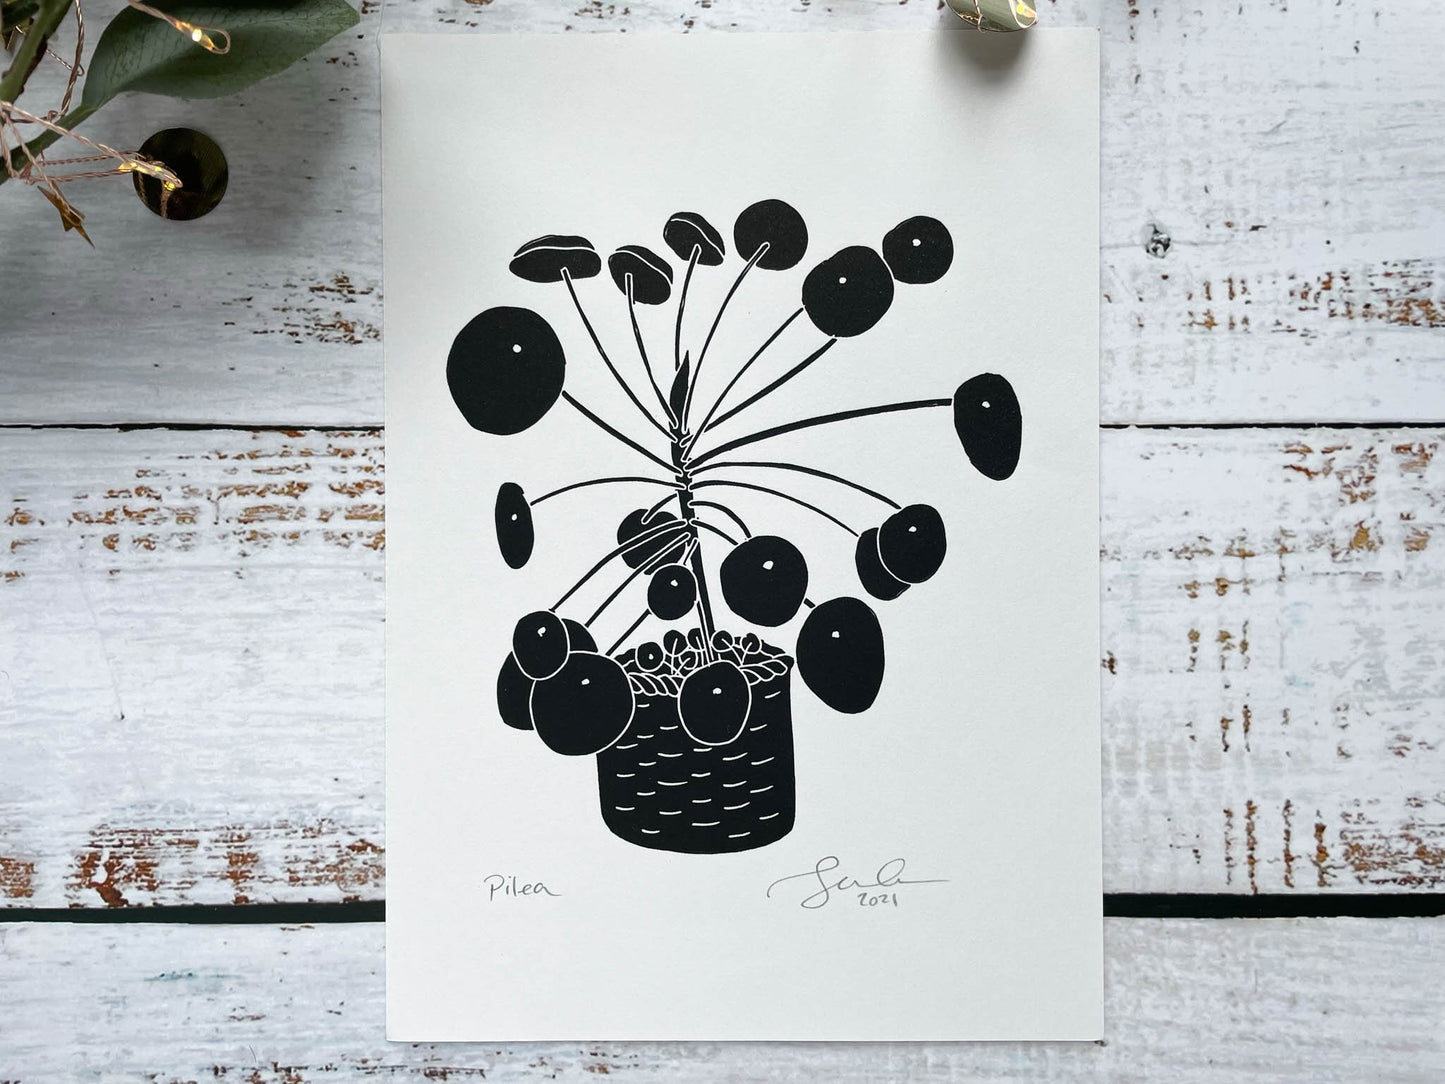 A black A5 lino print of a pilea plant